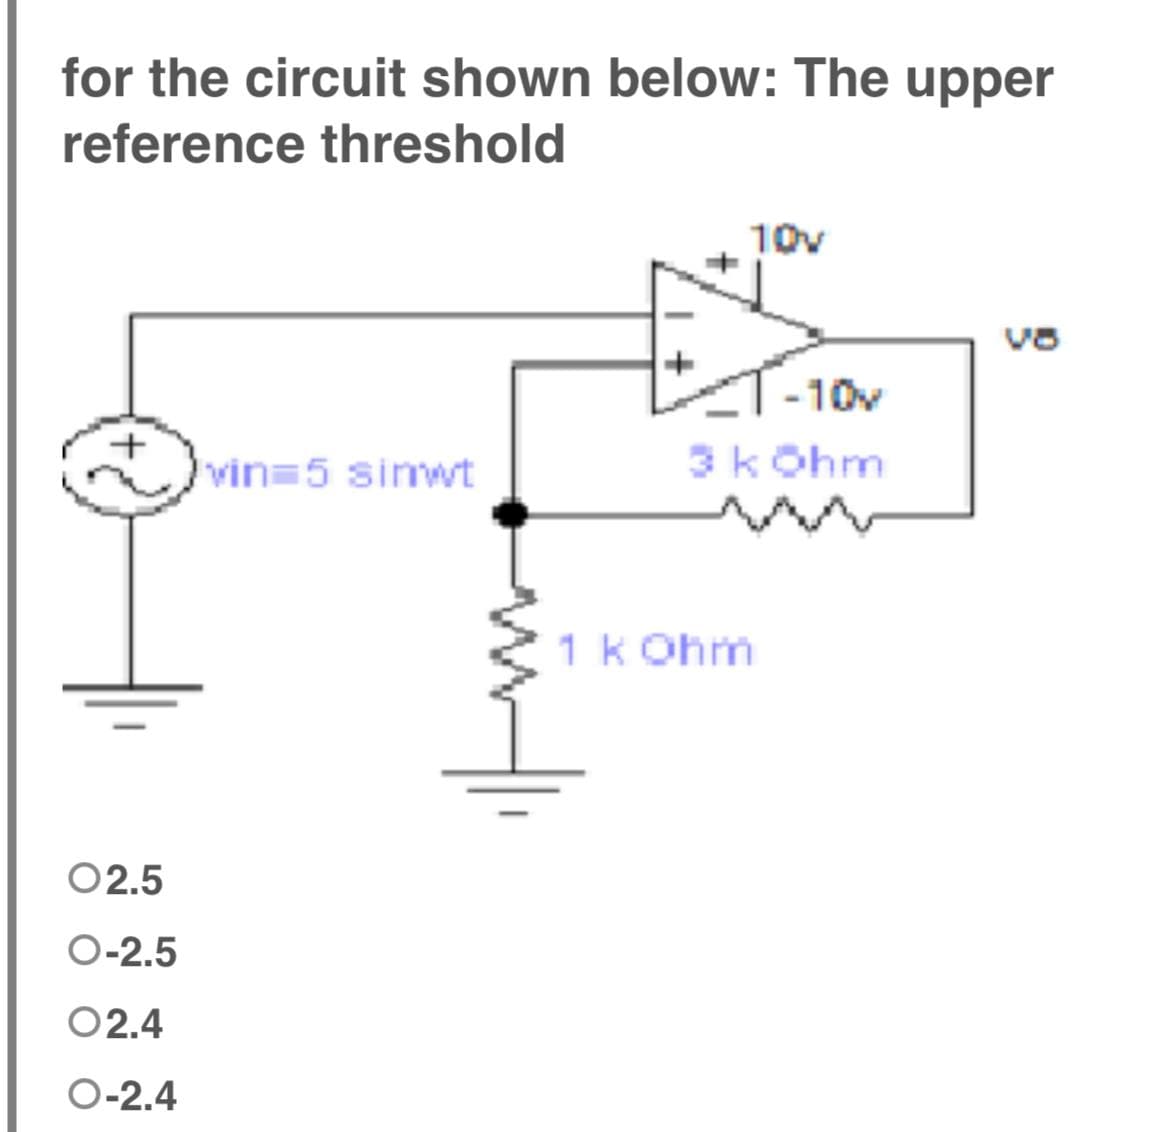 for the circuit shown below: The upper
reference threshold
10v
vin=5 simwt
02.5
O-2.5
O2.4
O-2.4
-10v
3 kOhm
1 kOhm